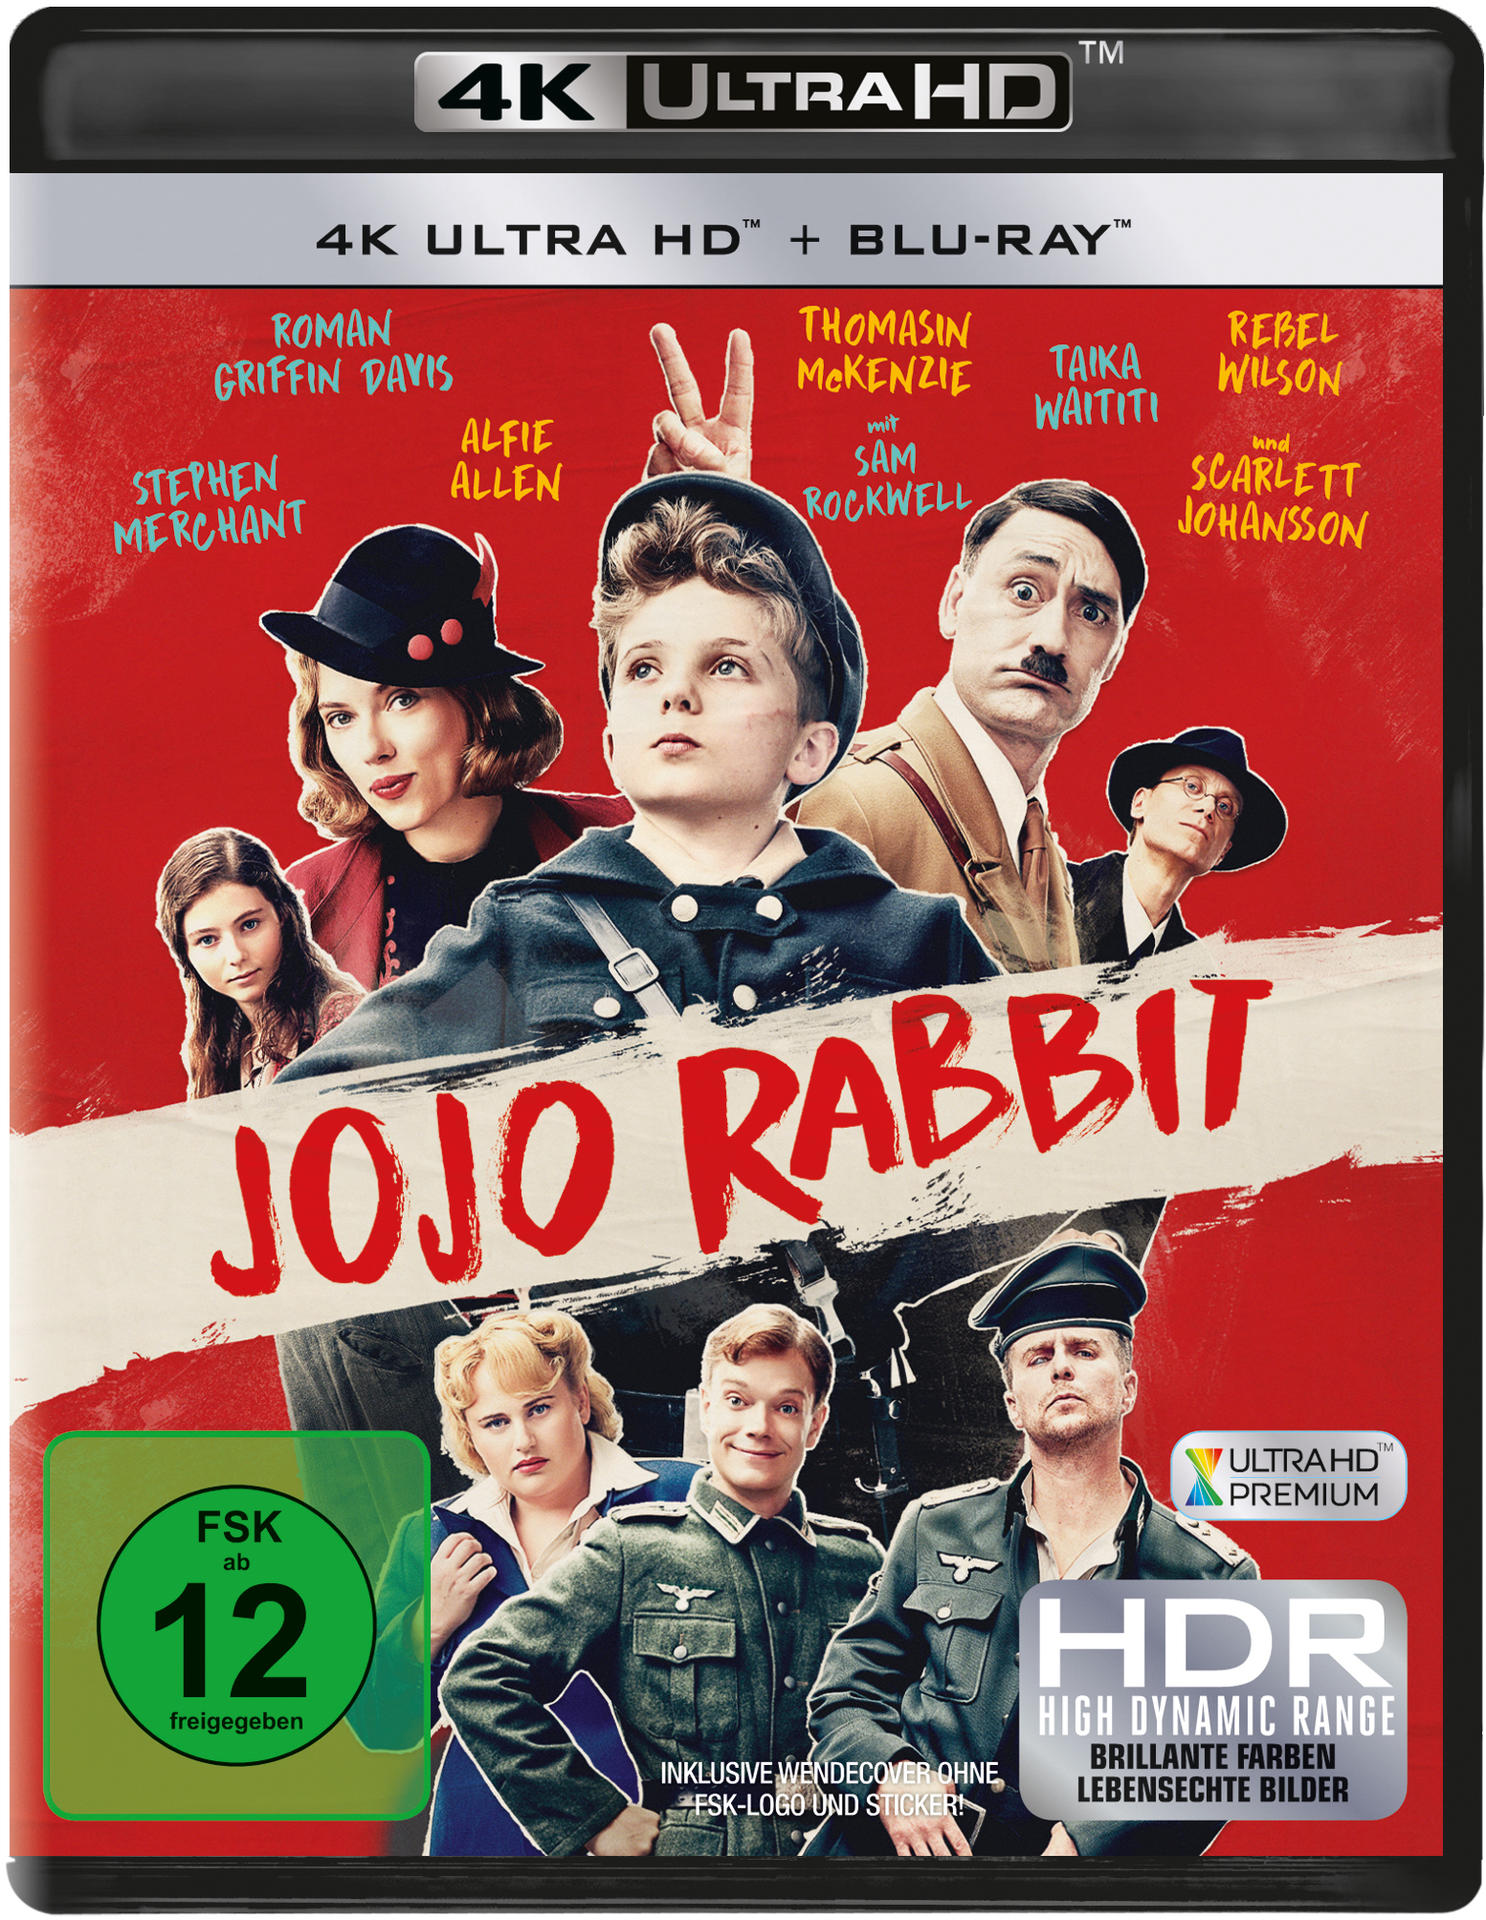 + HD 4K Rabbit Blu-ray Jojo Blu-ray Ultra